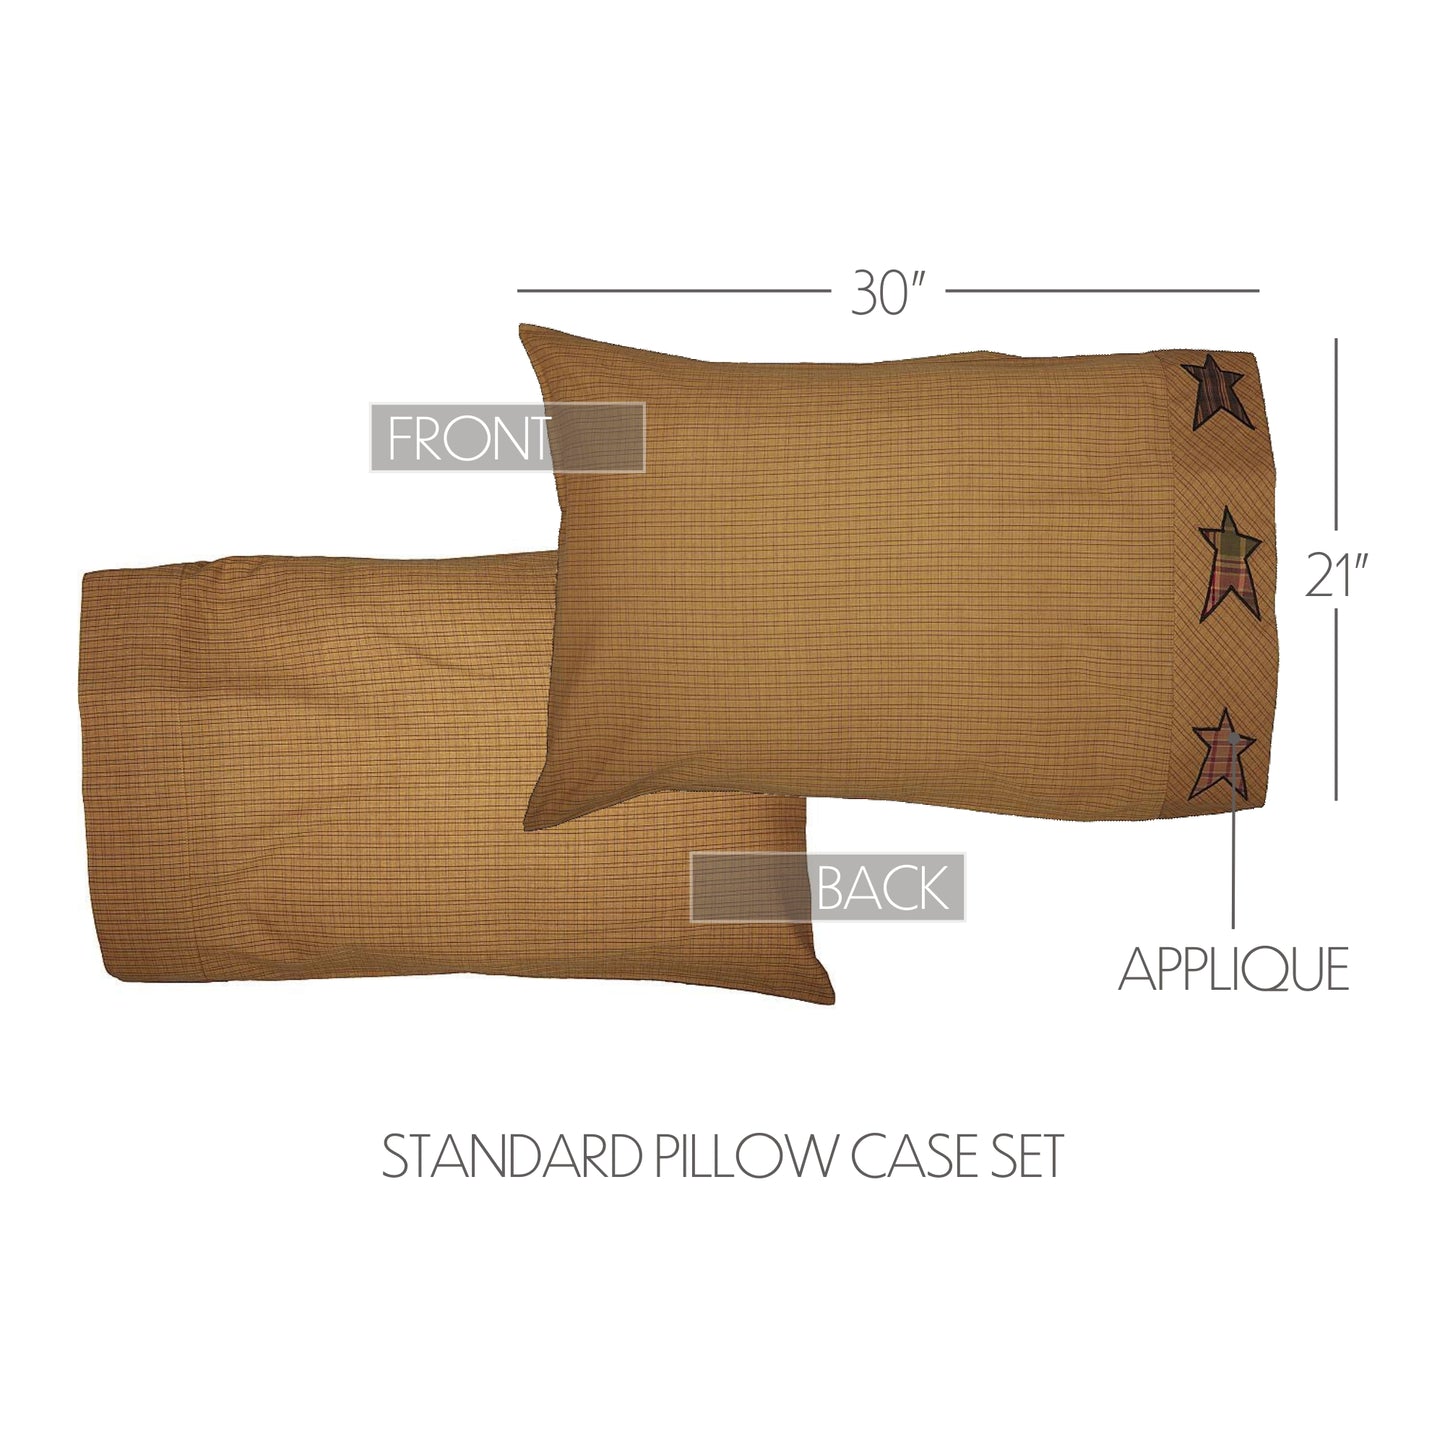 56783-Stratton-Standard-Pillow-Case-w-Applique-Star-Set-of-2-21x30-image-5